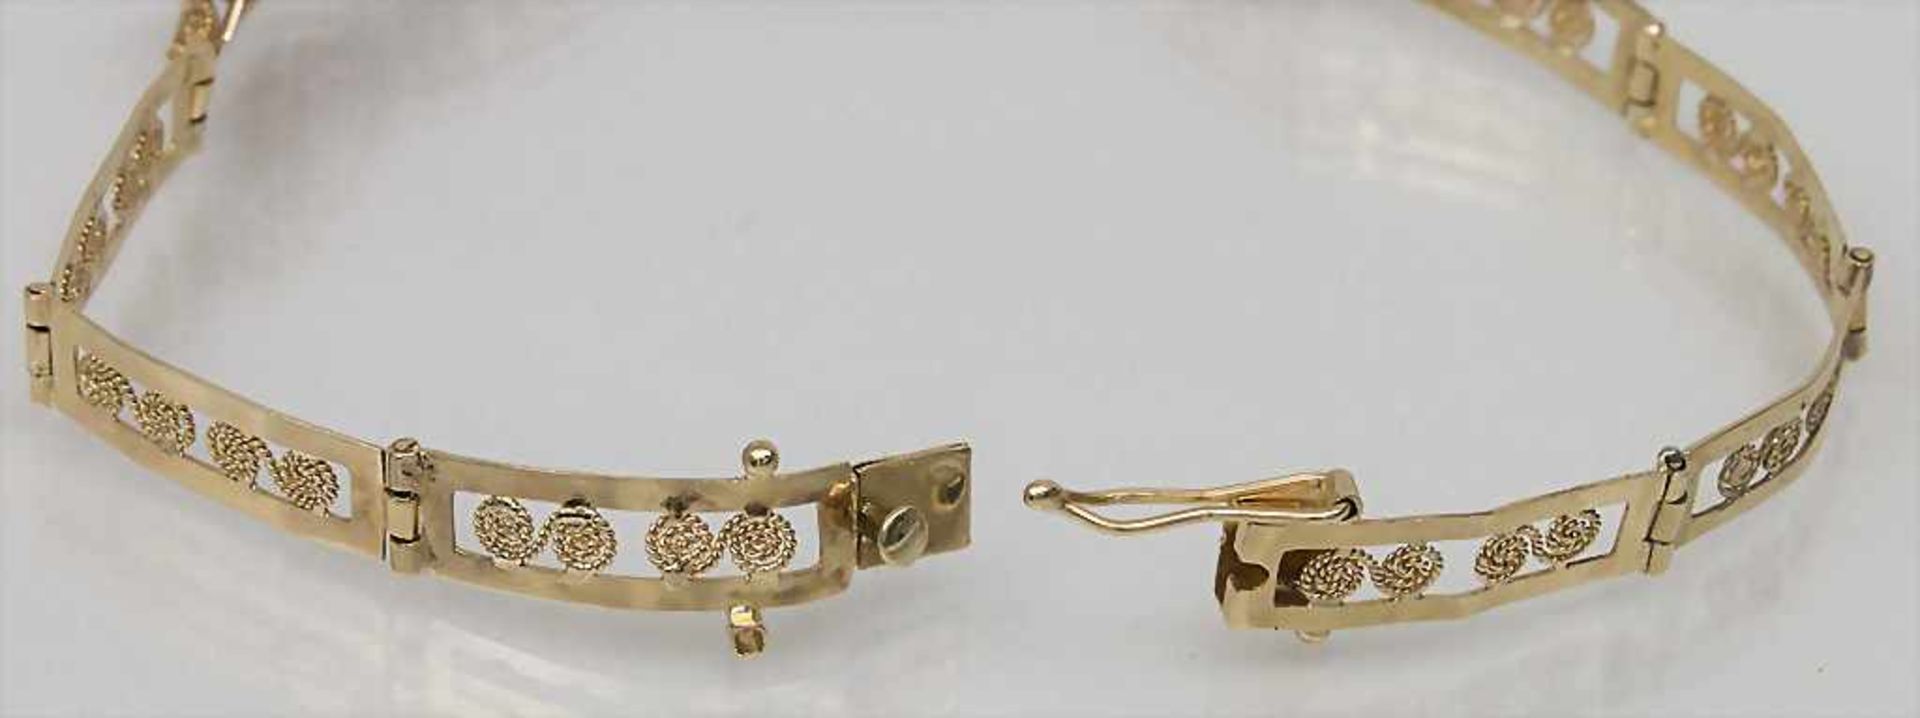 Goldarmband mit Smaragden / An 18k. gold bracelet with emaraldsMaterial: GG 18 Kt 750/000, - Bild 2 aus 3